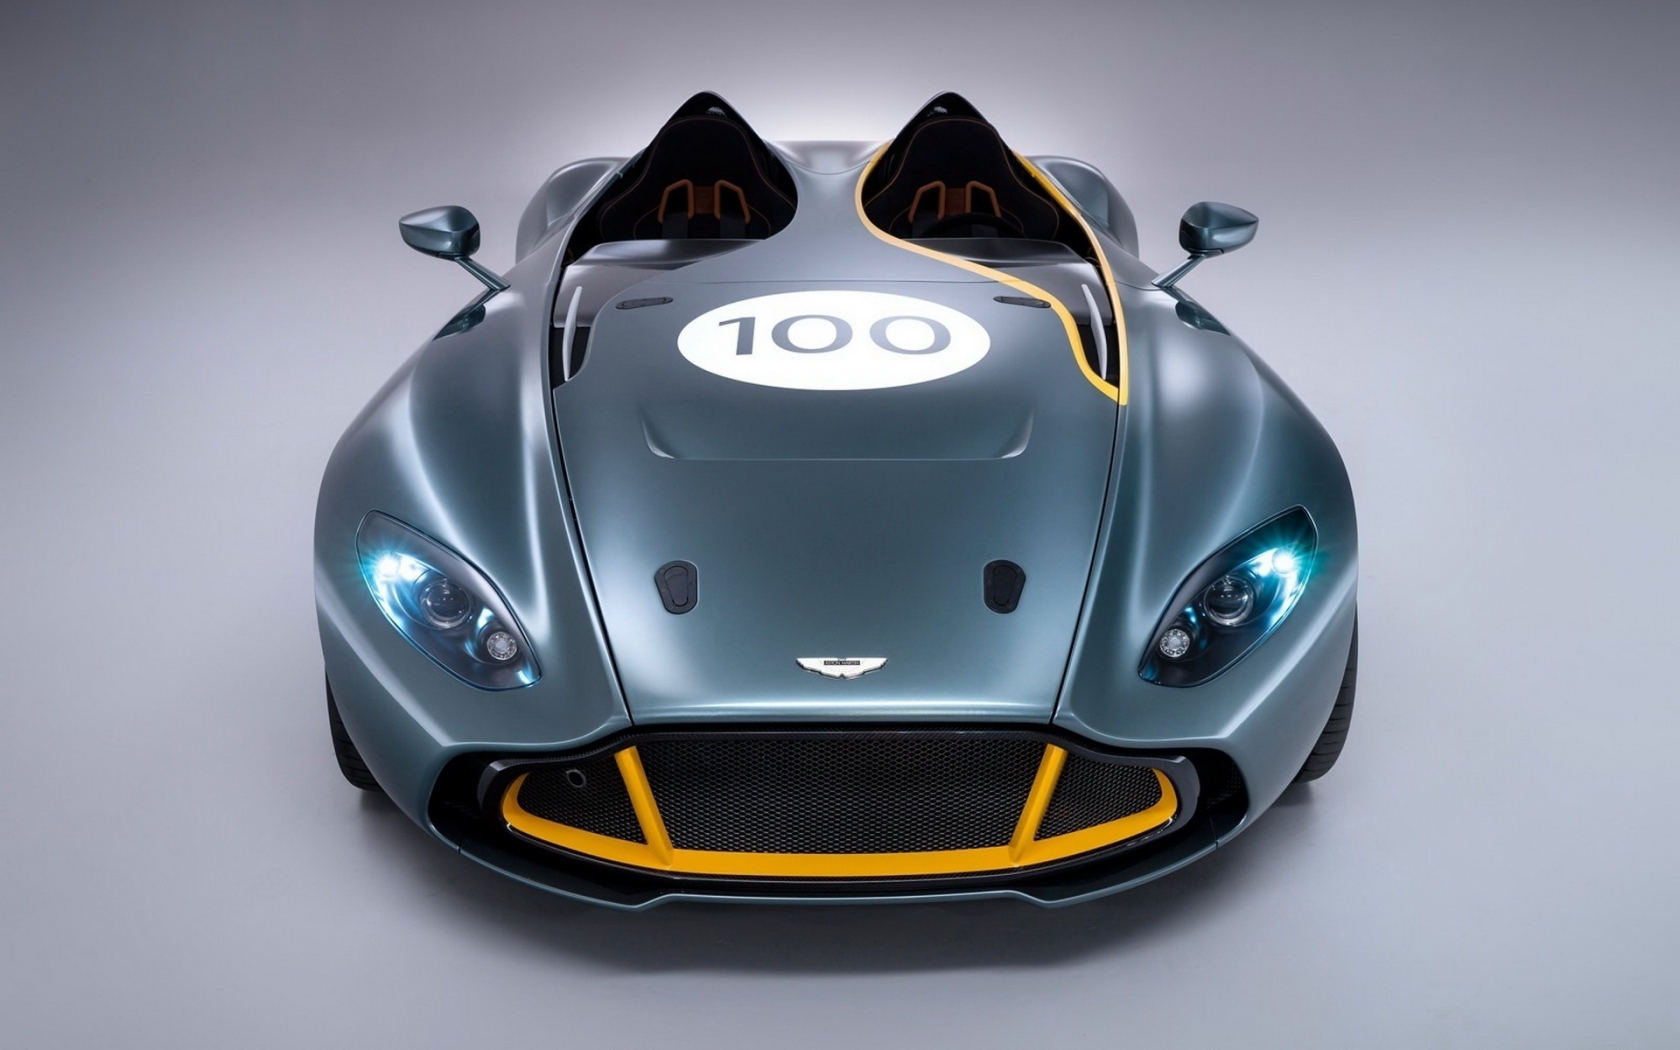 Aston Martin CC100 Speedster Front View for 1680 x 1050 widescreen resolution